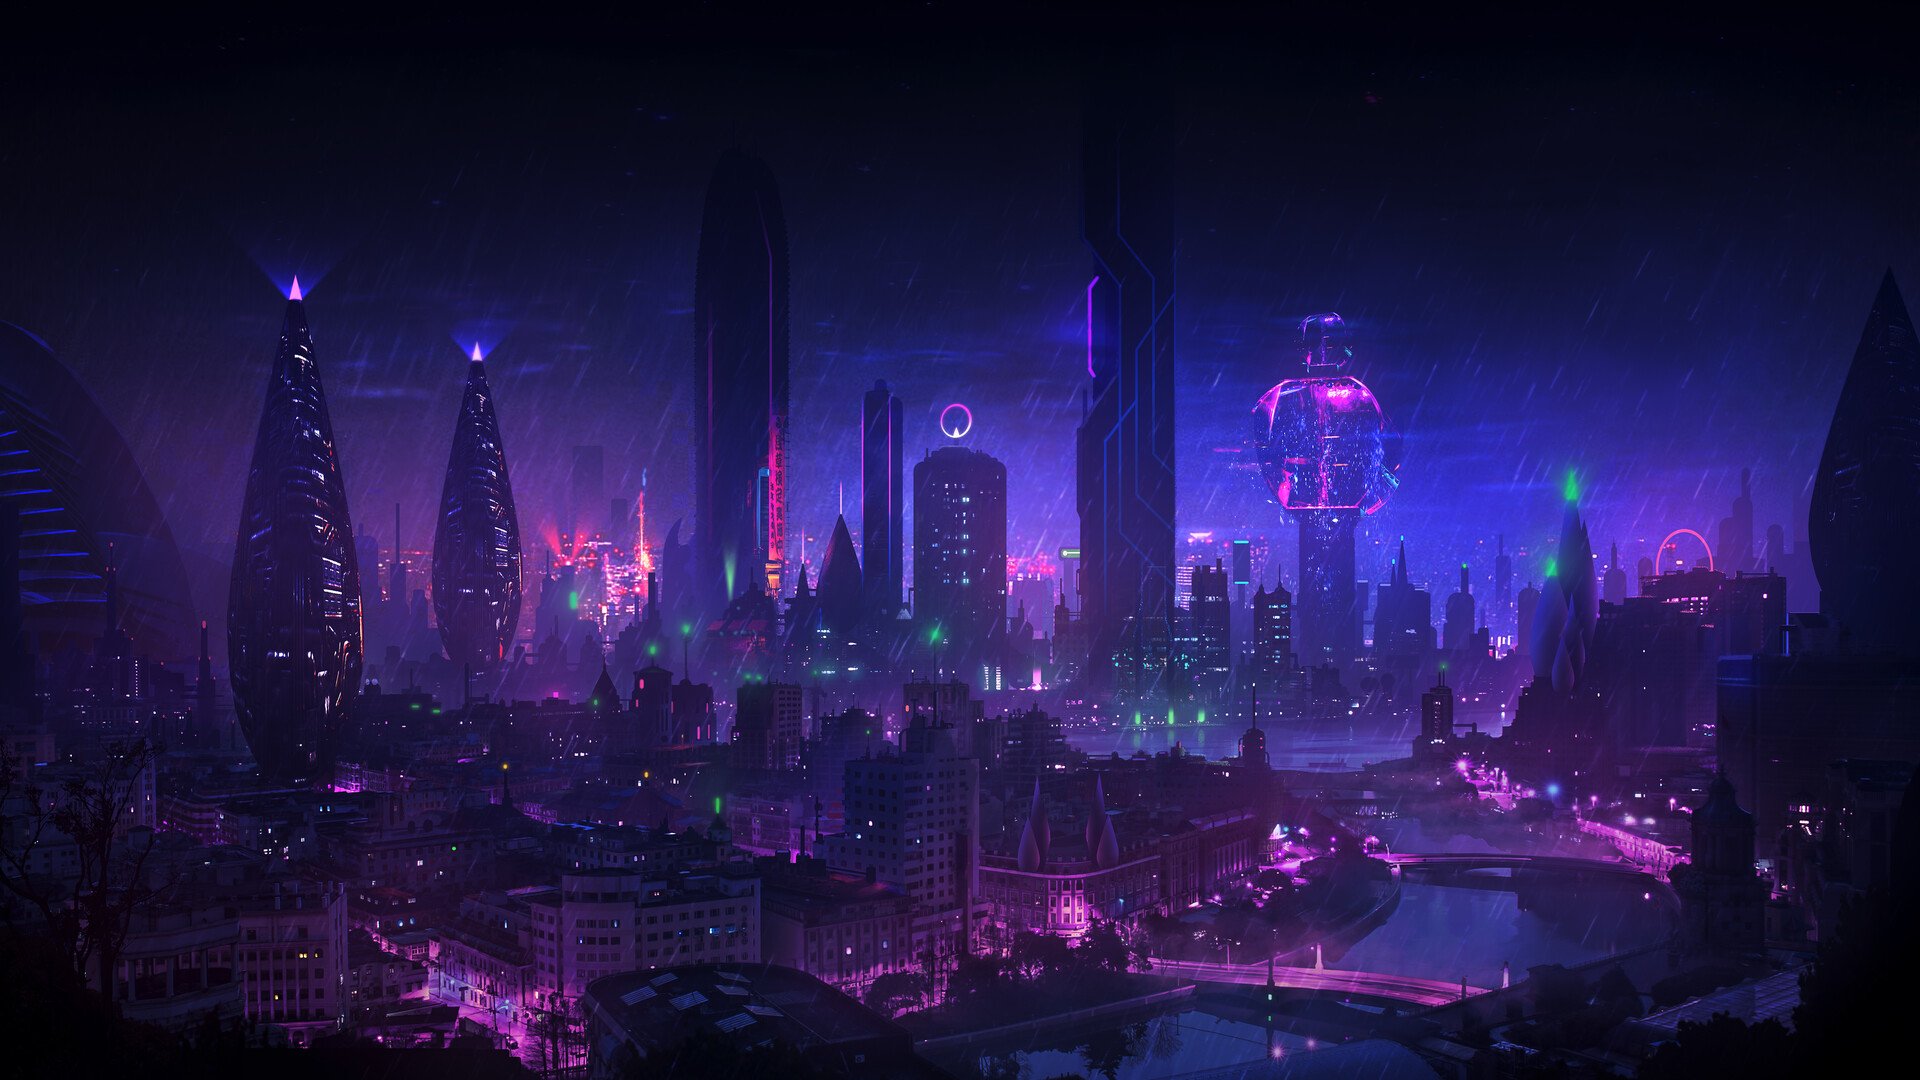 Wallpaper, DominiqueVanVelsen, cyberpunk, city, night, rain, neon glow, cityscape, purple, bridge 1920x1080